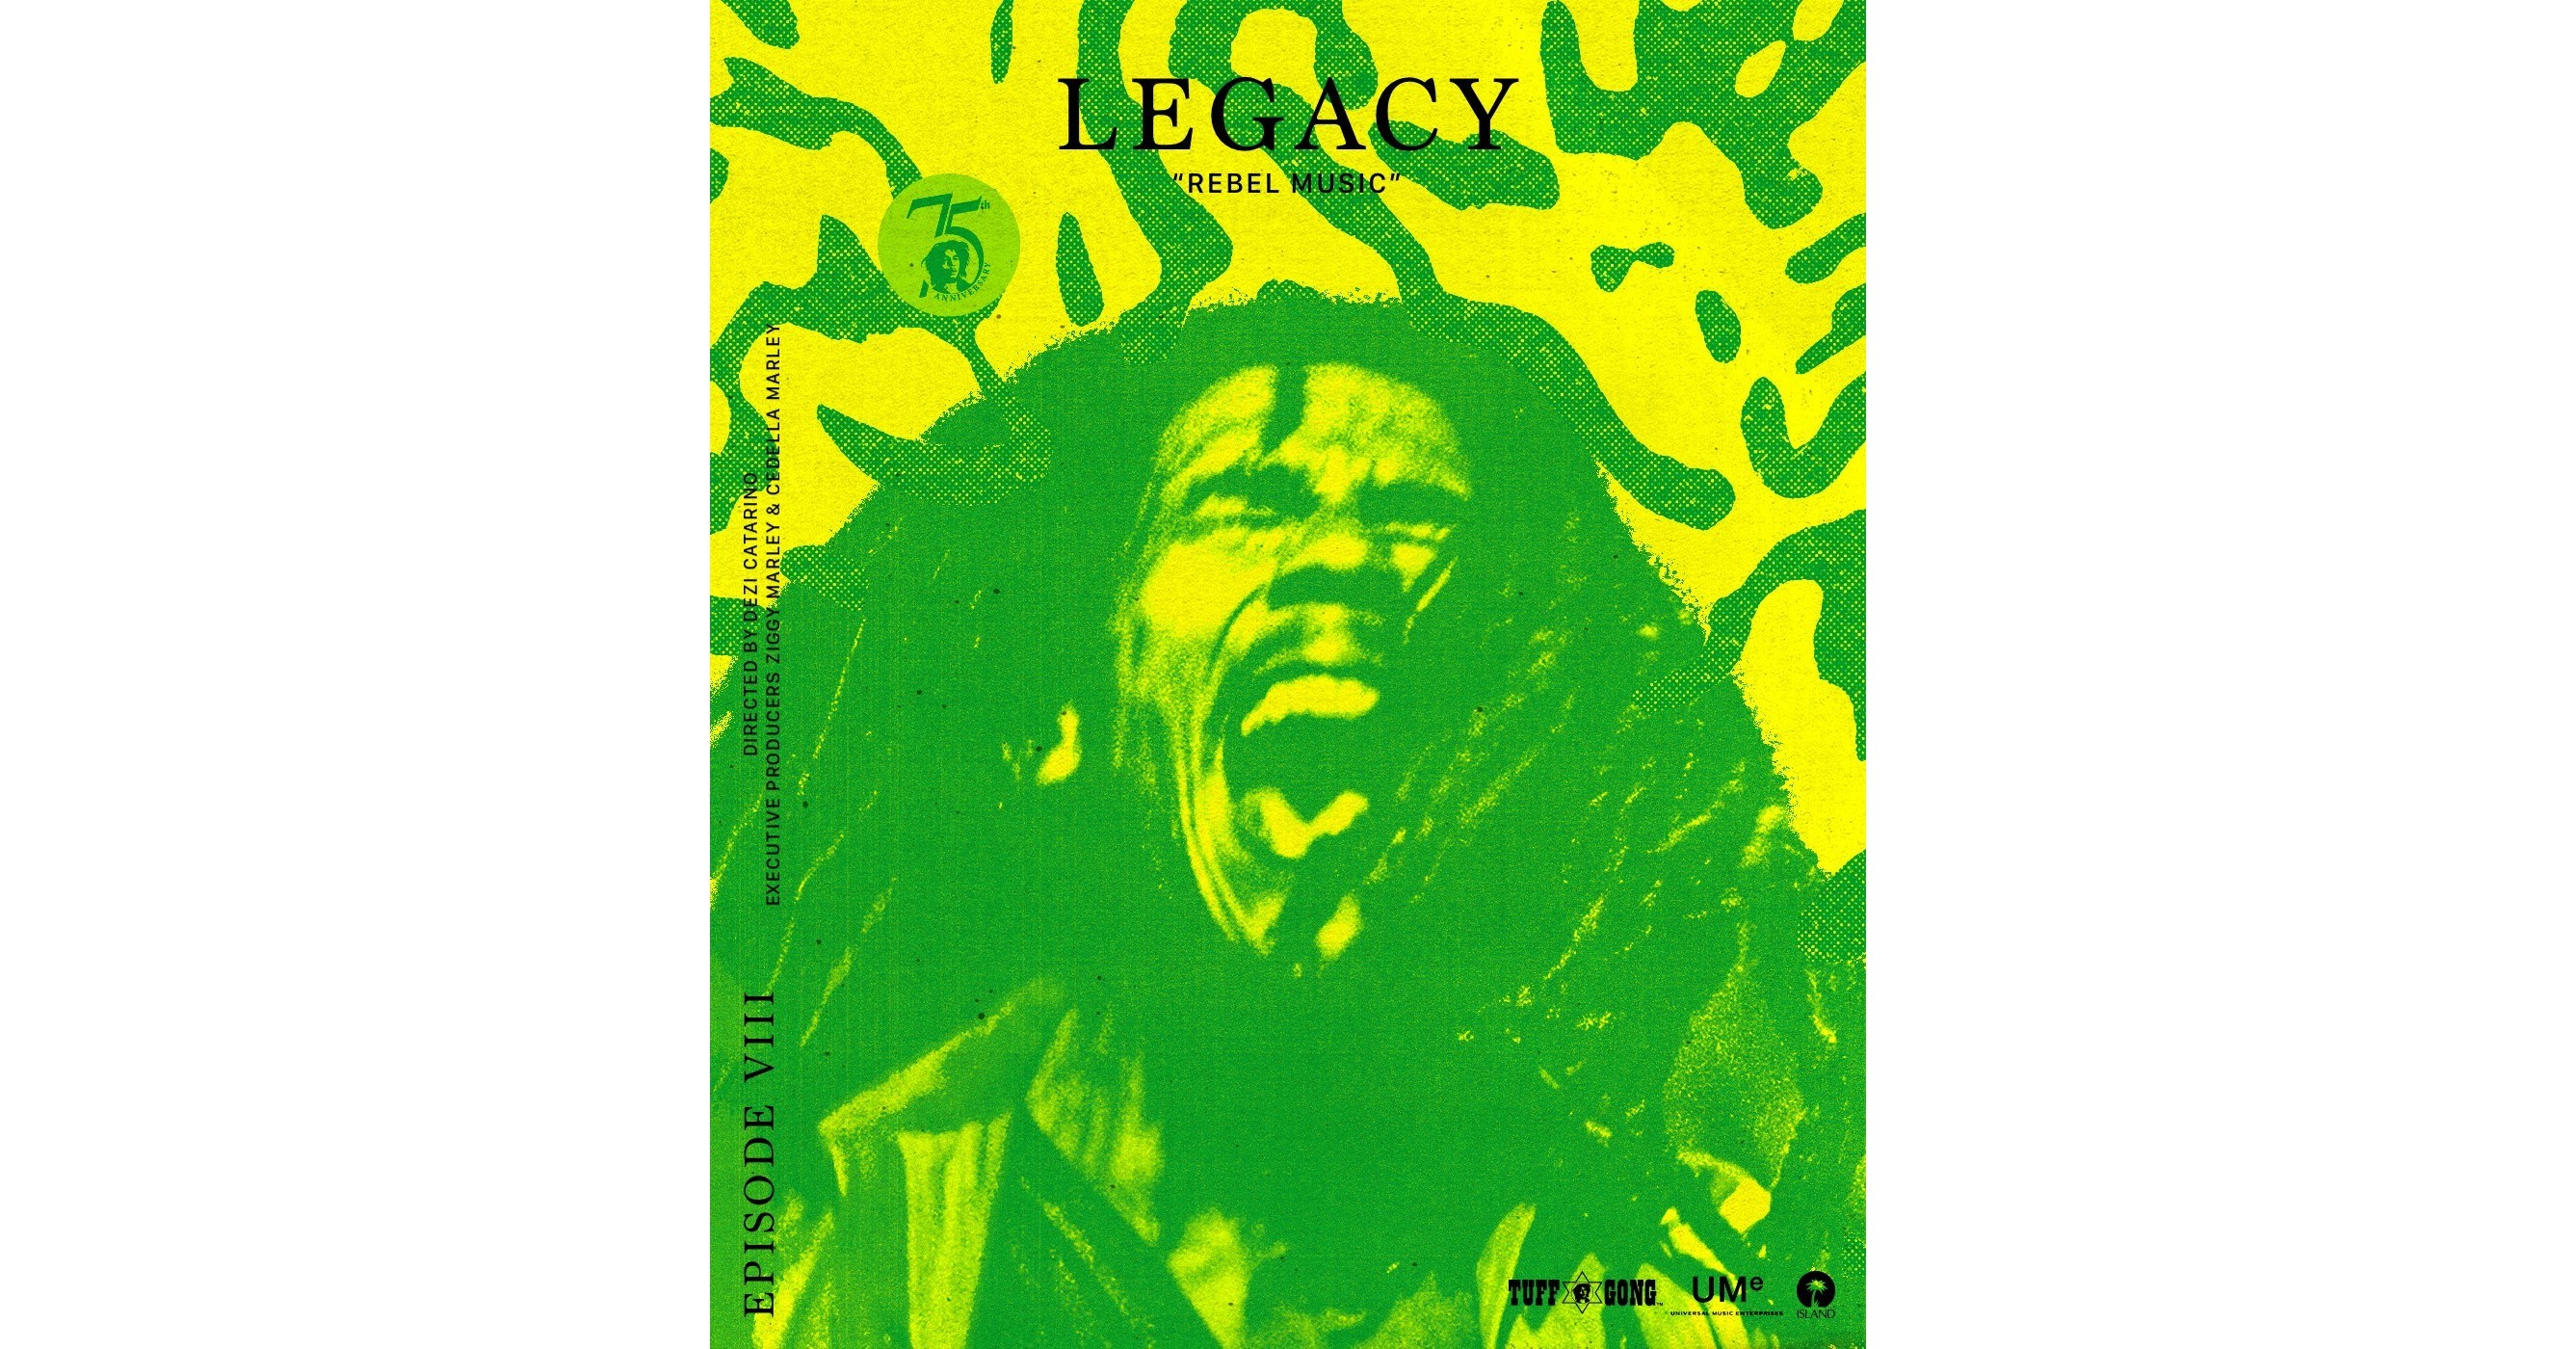 Bob Marley at 70: legend and legacy, Bob Marley